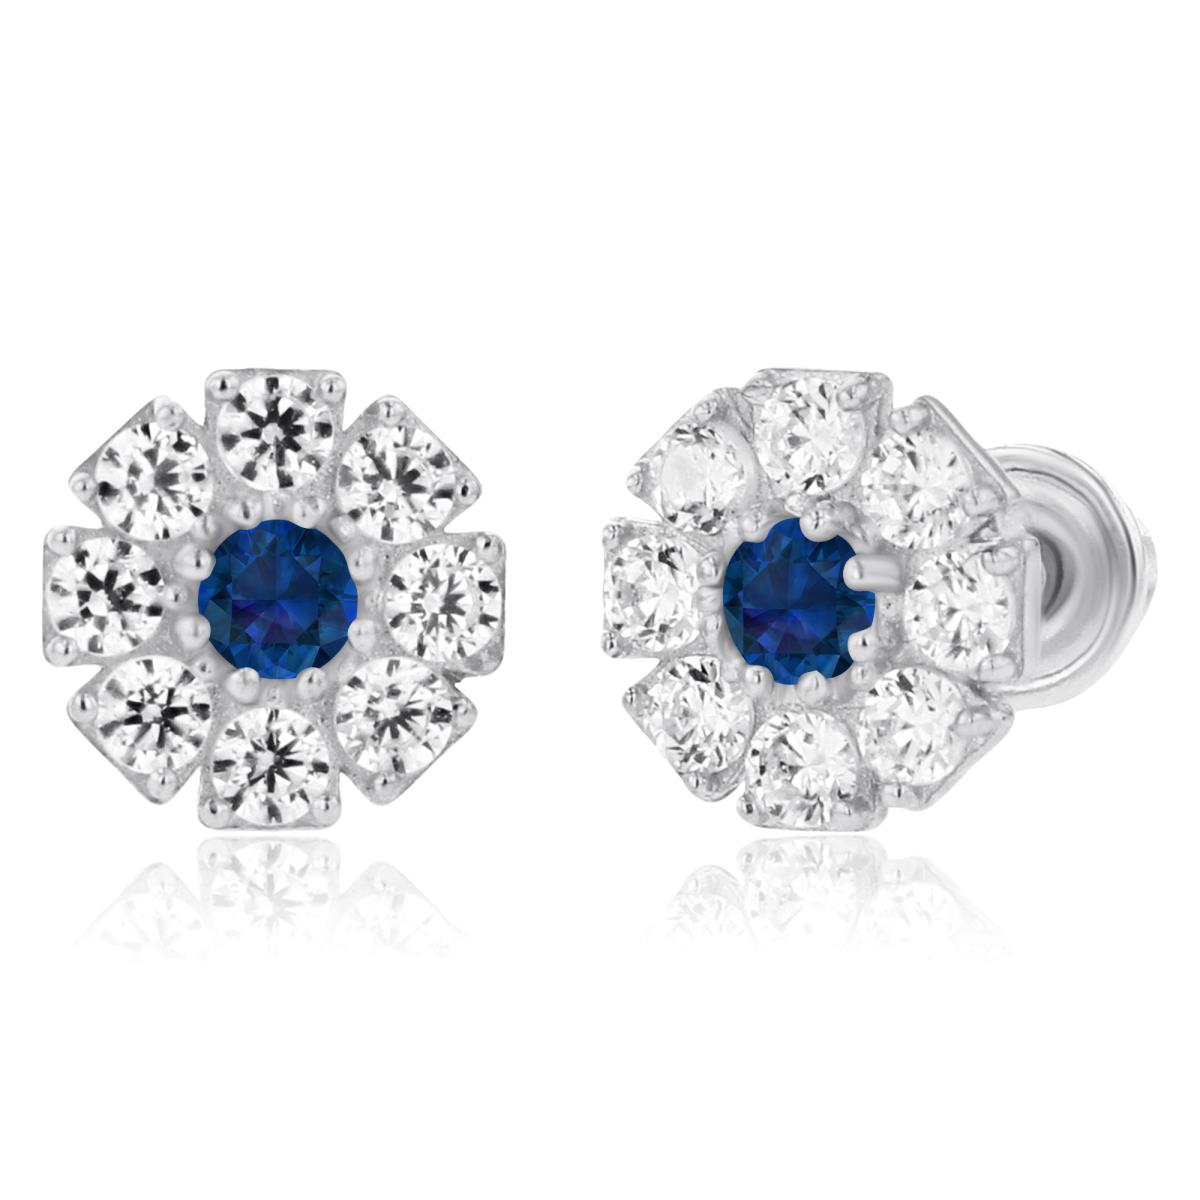 14K White Gold 2mm Round Created Blue Sapphire & 1.5mm Created White Sapphire Flower Screwback Earrings